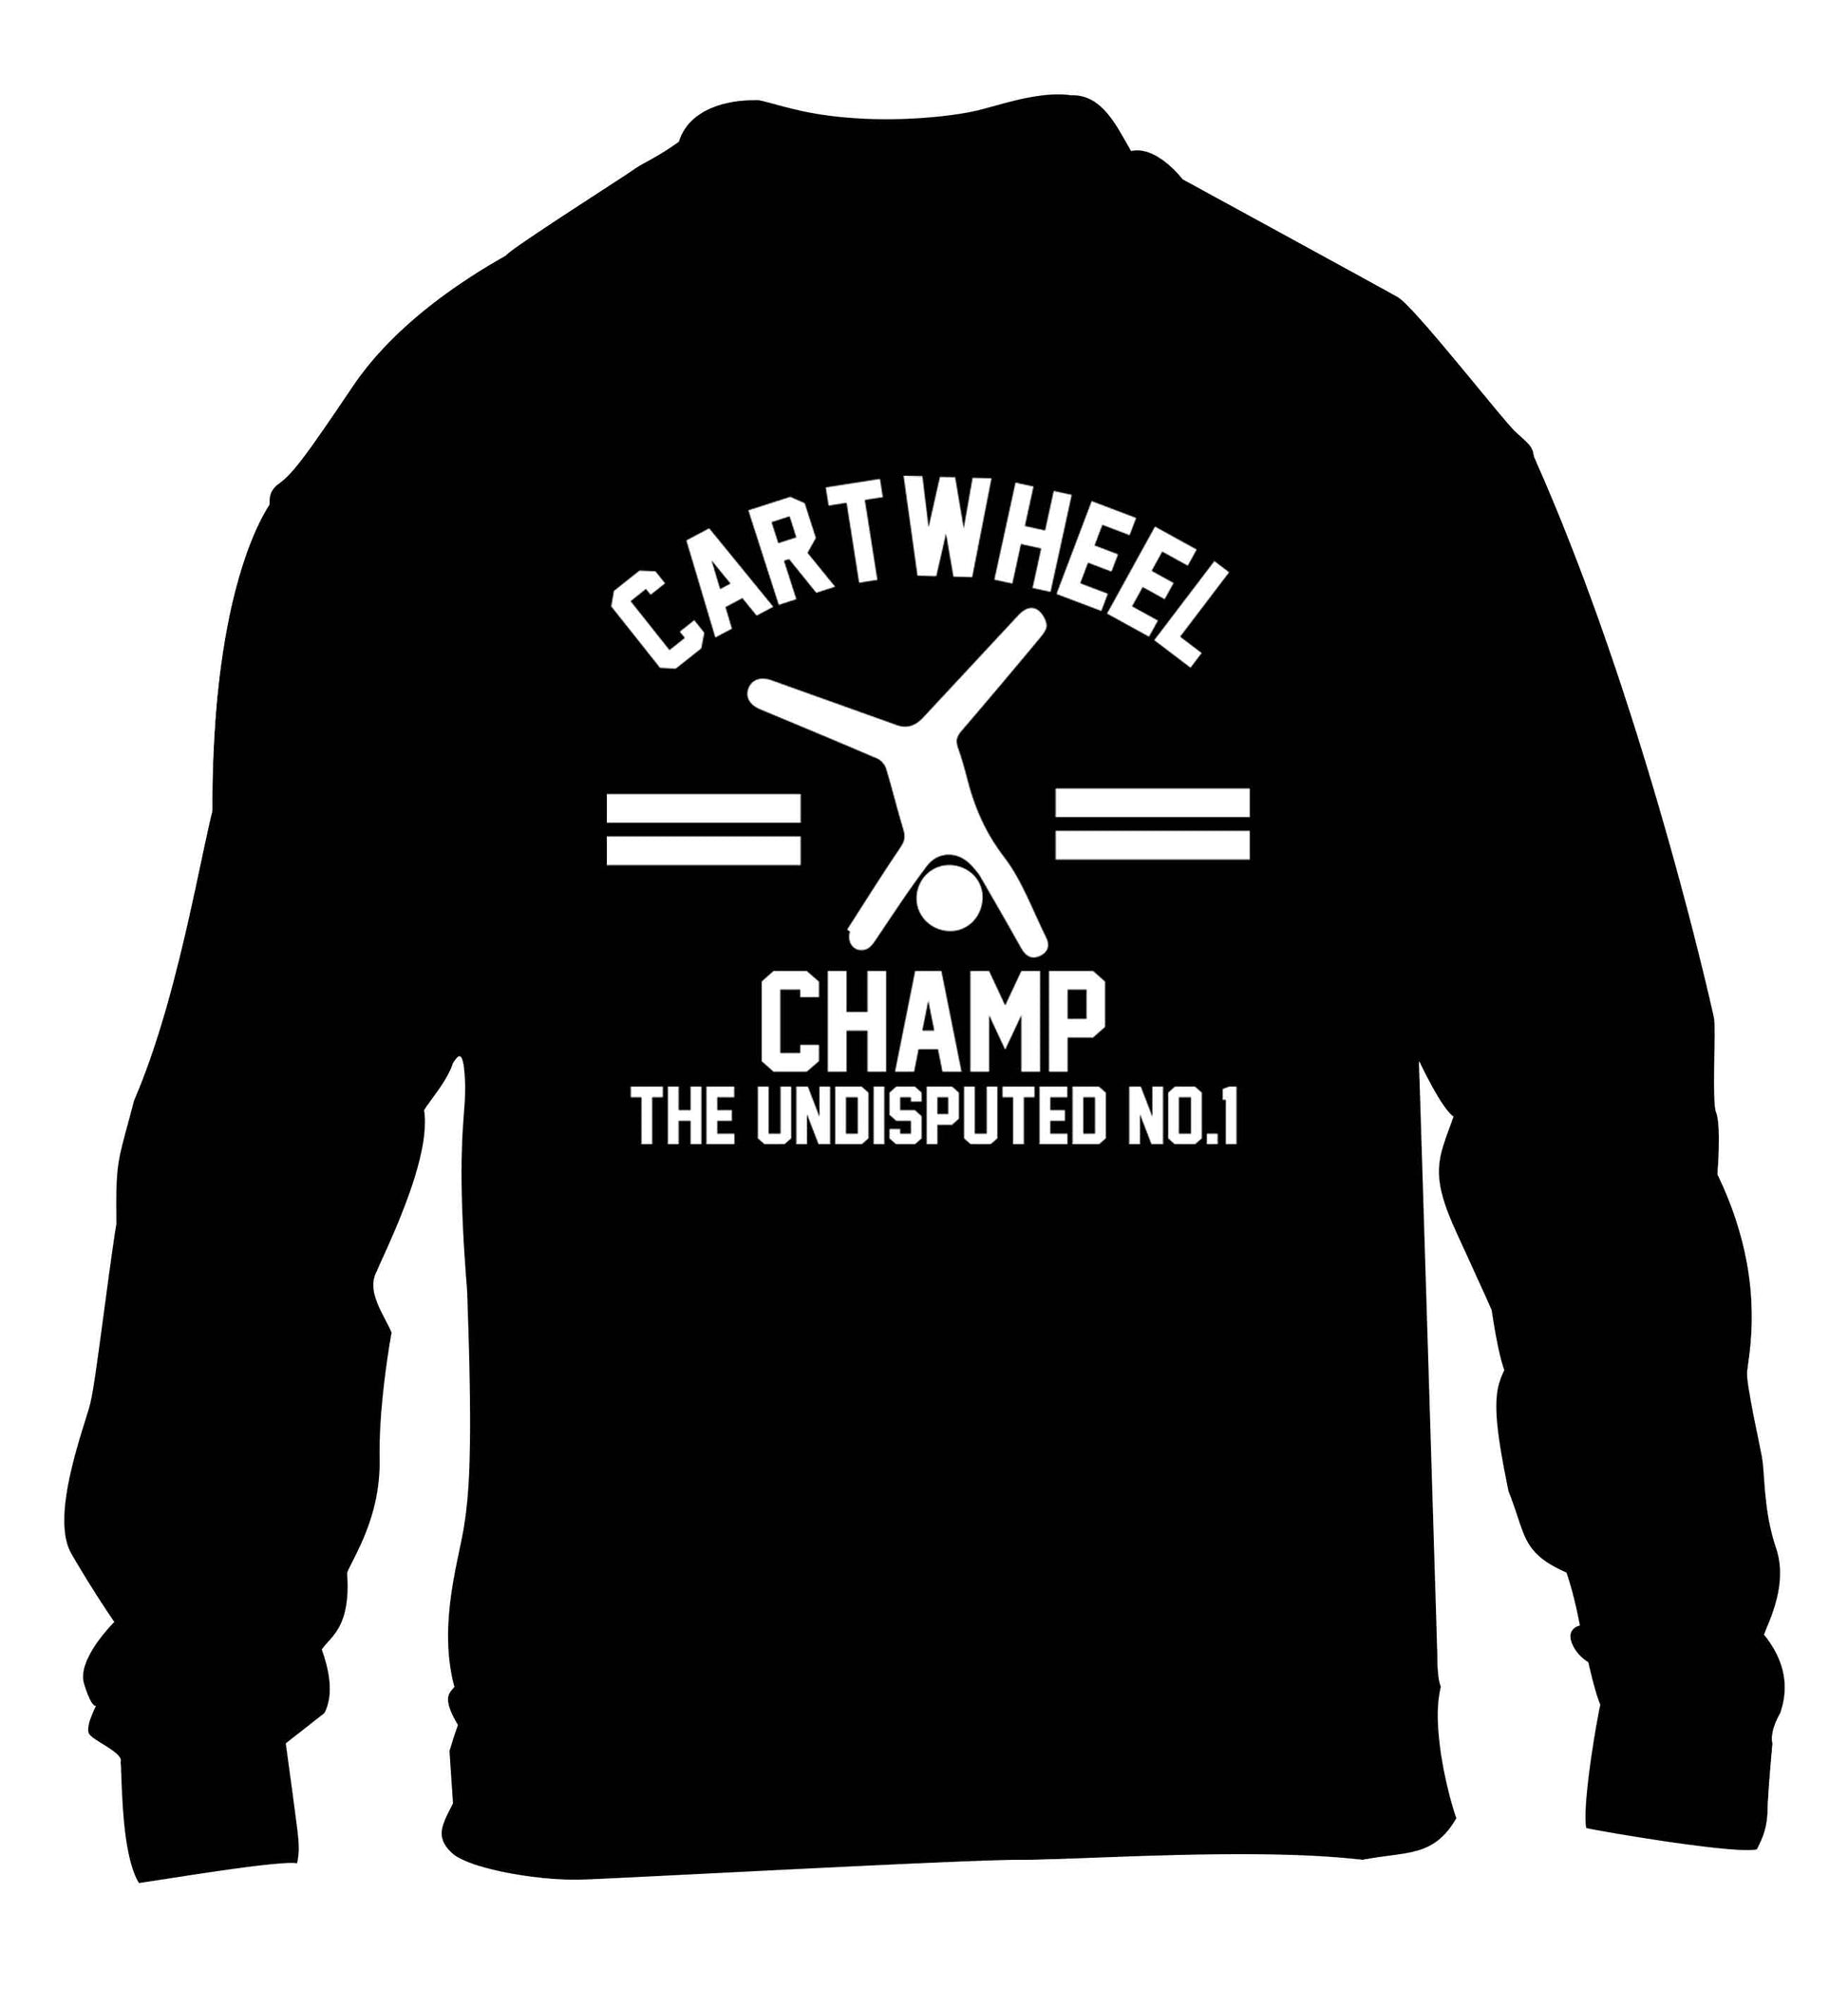 Undisputed cartwheel championship no.1  children's black sweater 12-13 Years